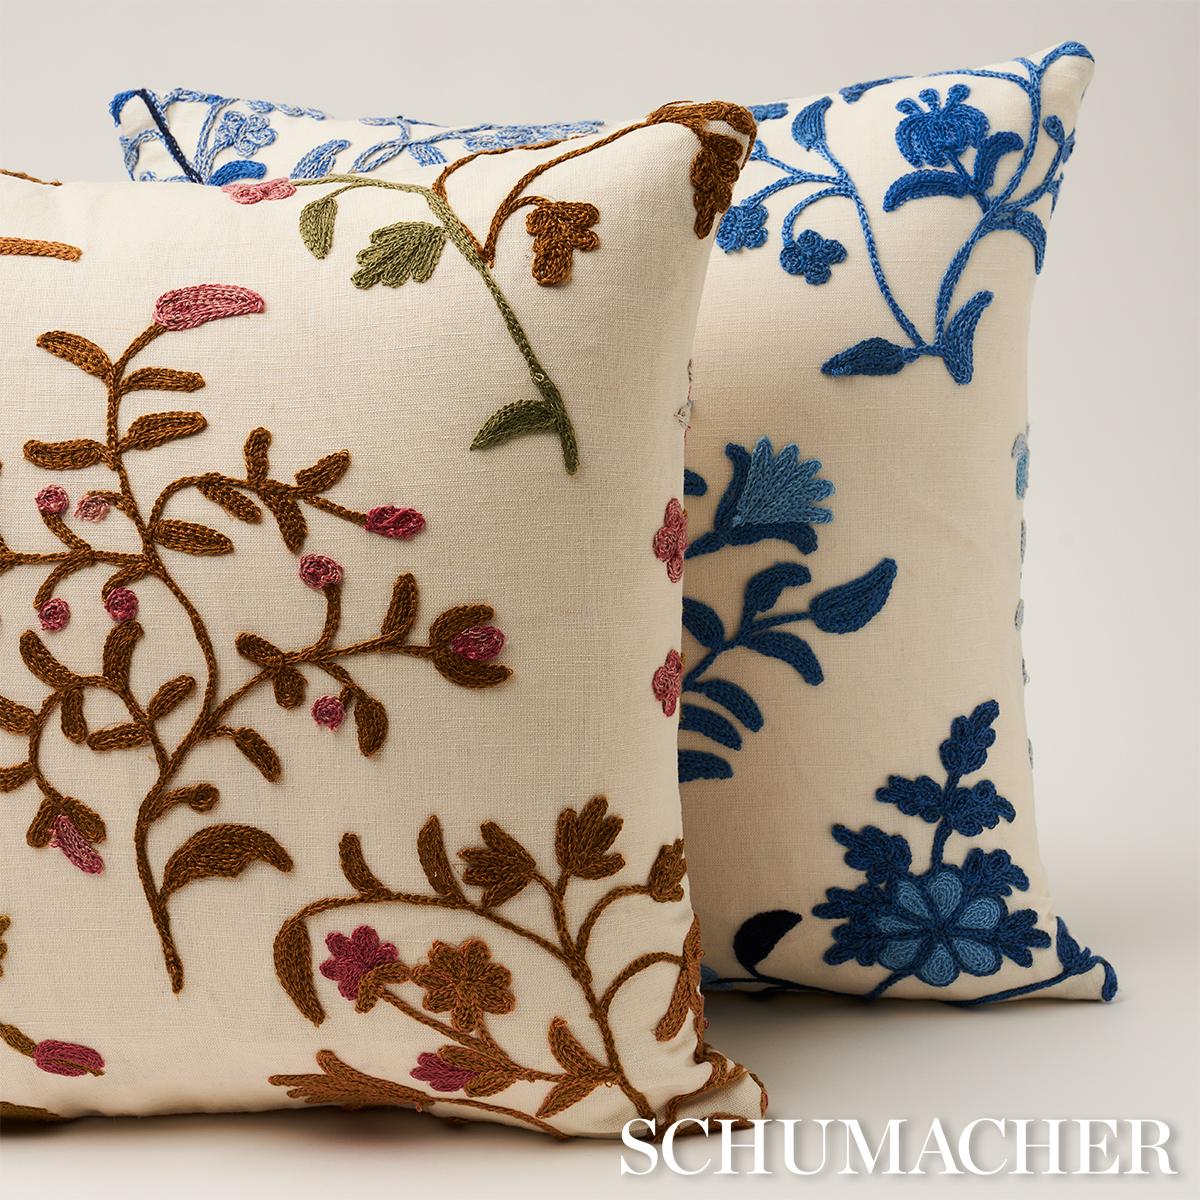 Raleigh Crewel Embroidery Pillow A_AUTUMN